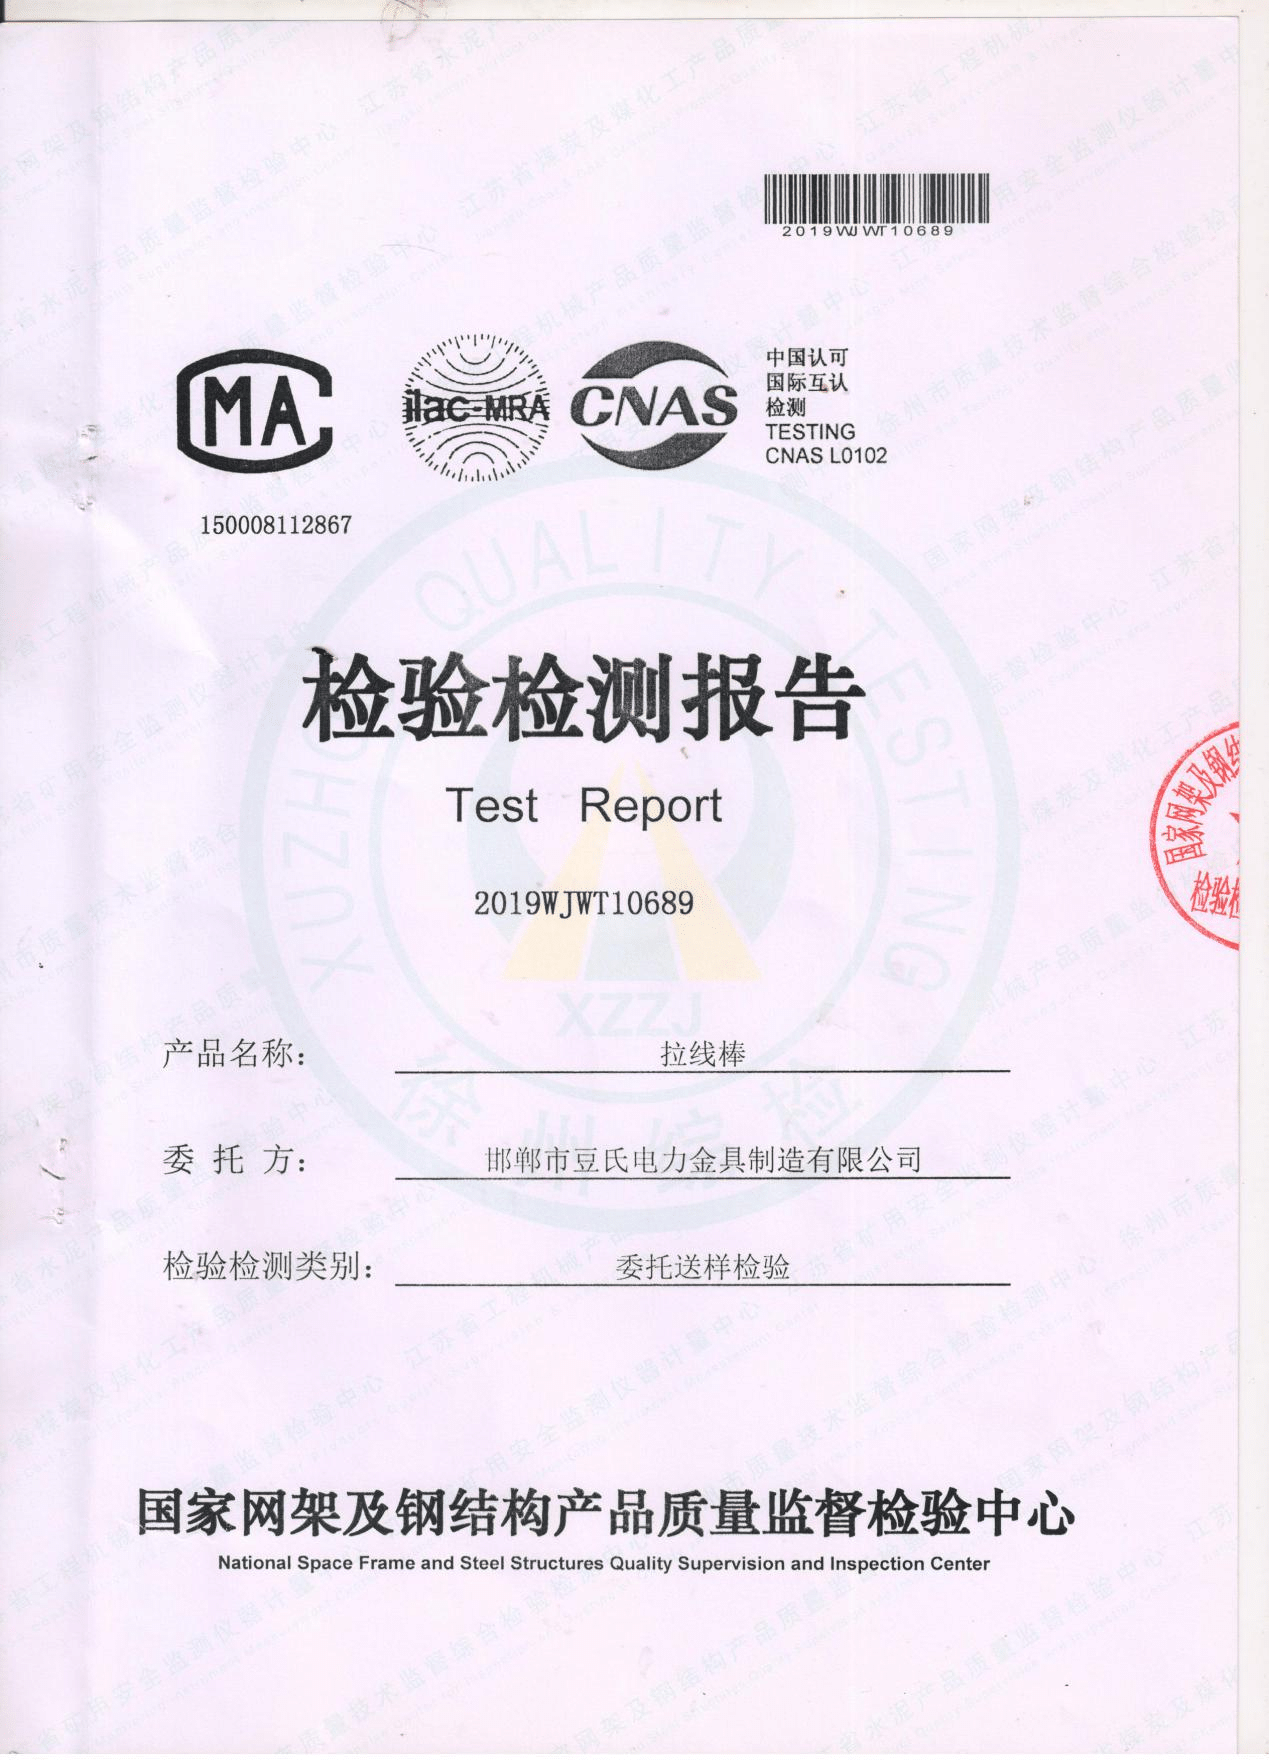 Honorary certificate (14)